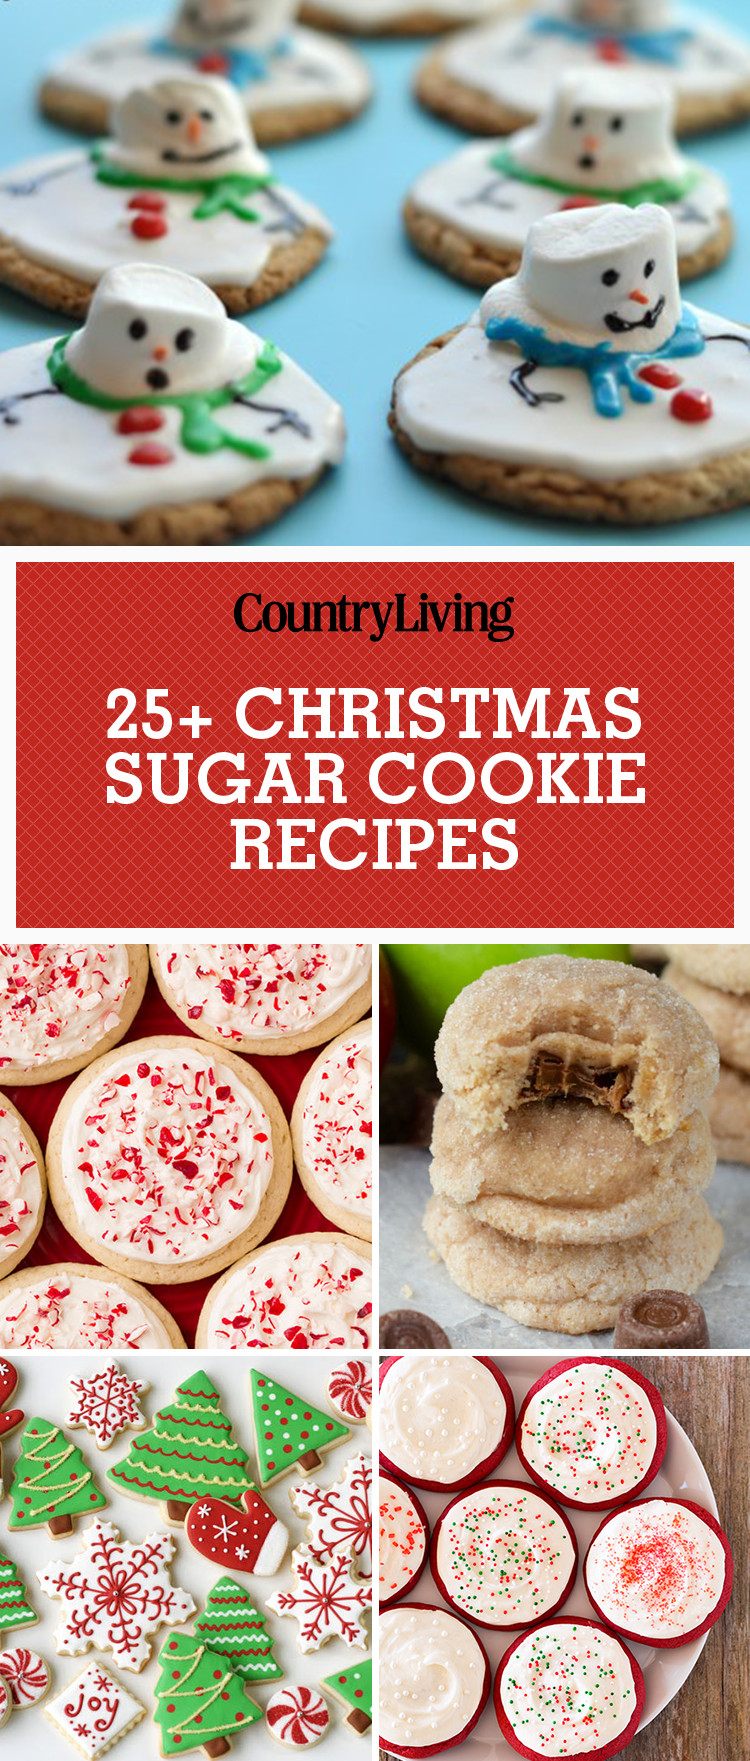 Christmas Sugar Cookies Recipes
 25 Easy Christmas Sugar Cookies Recipes & Decorating